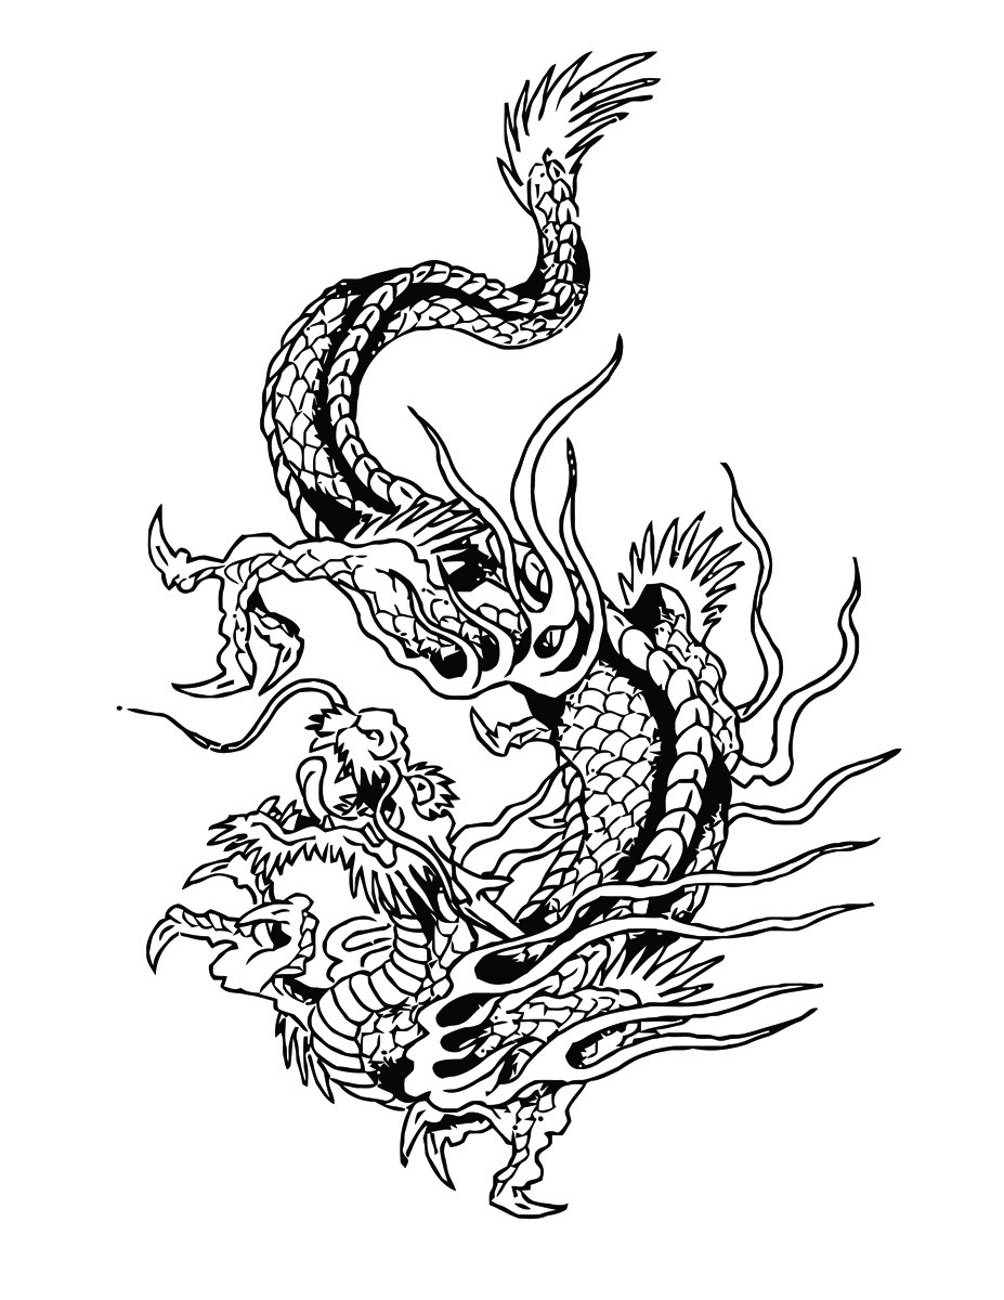 Китайский дракон эскиз Минимализм